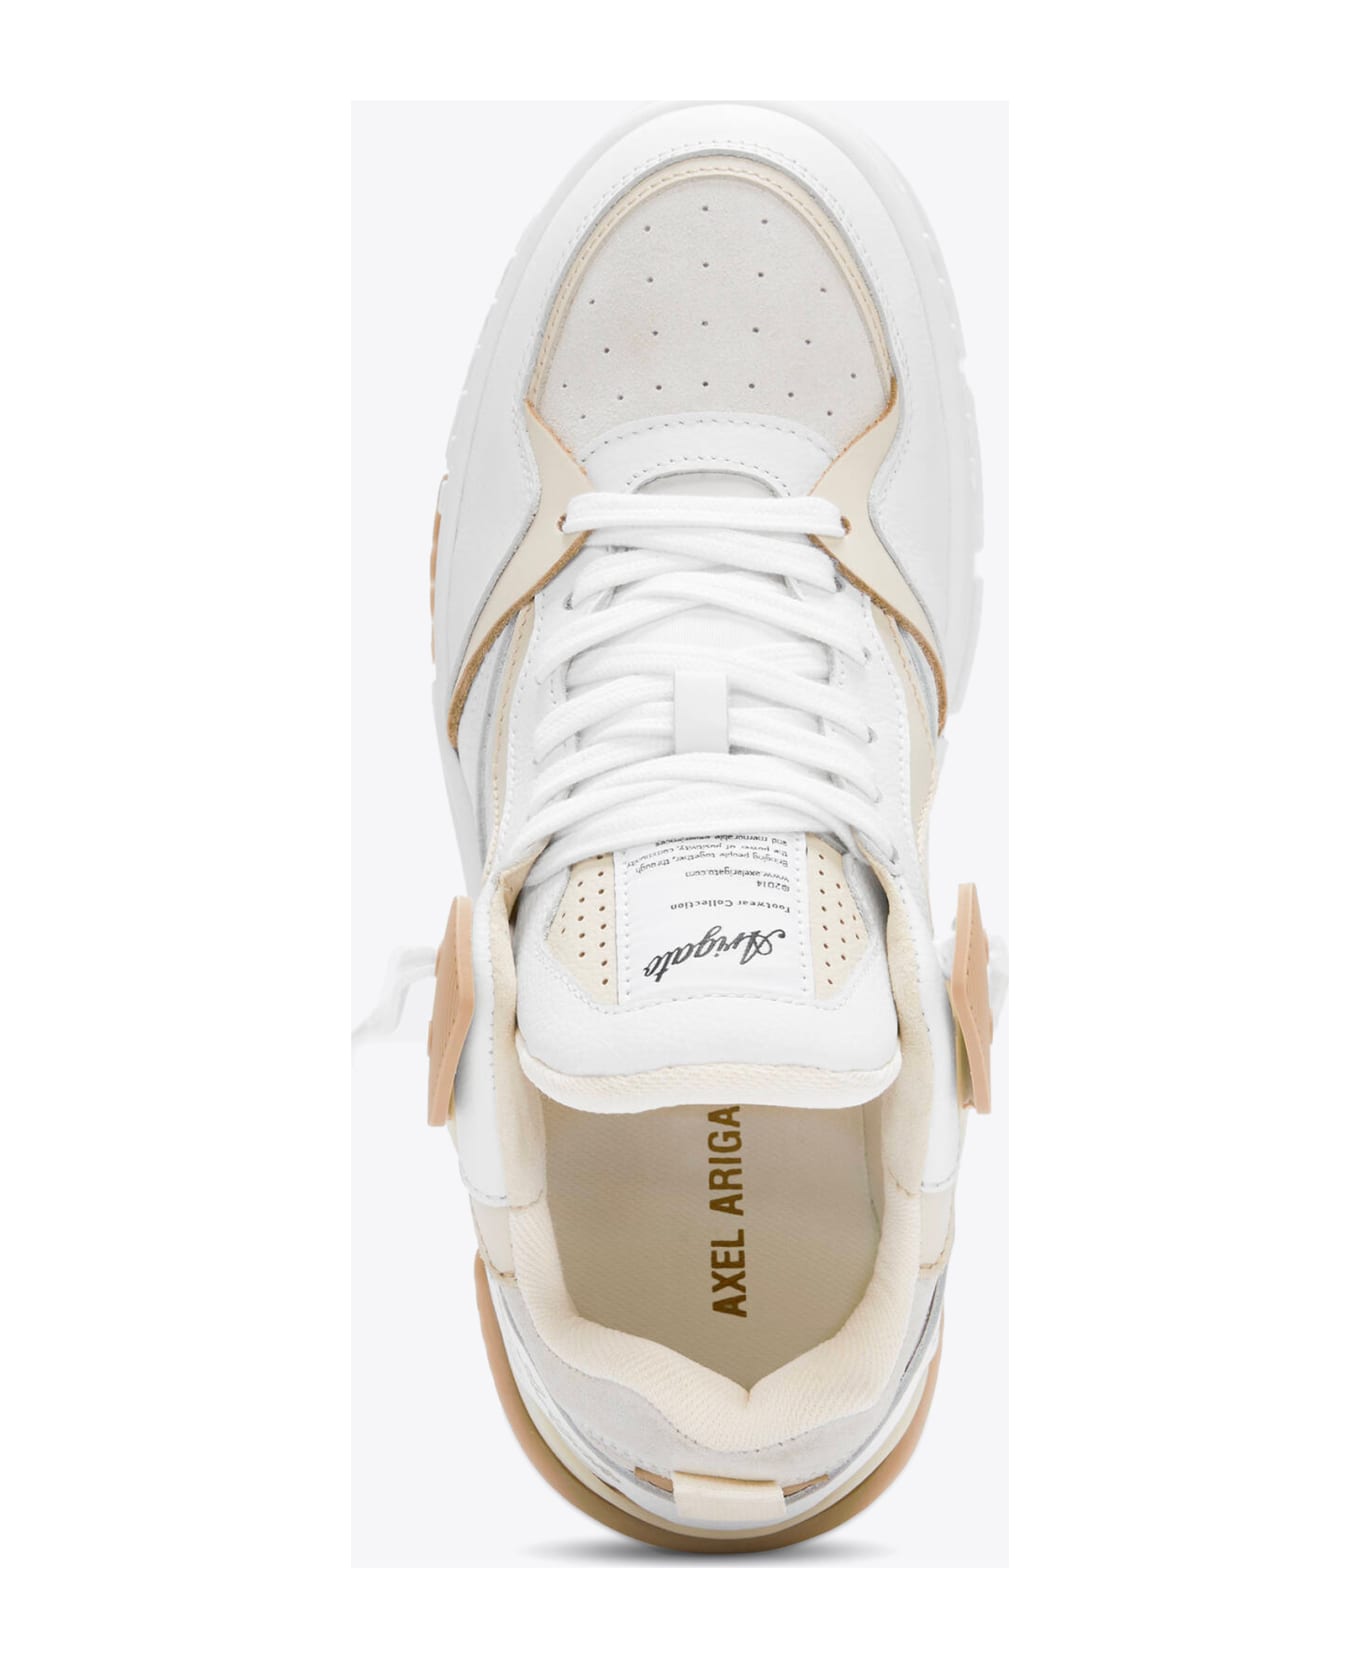 Axel Arigato Astro Sneaker White and beige leather 90s style low sneaker - Astro Sneaker - Bianco/beige スニーカー